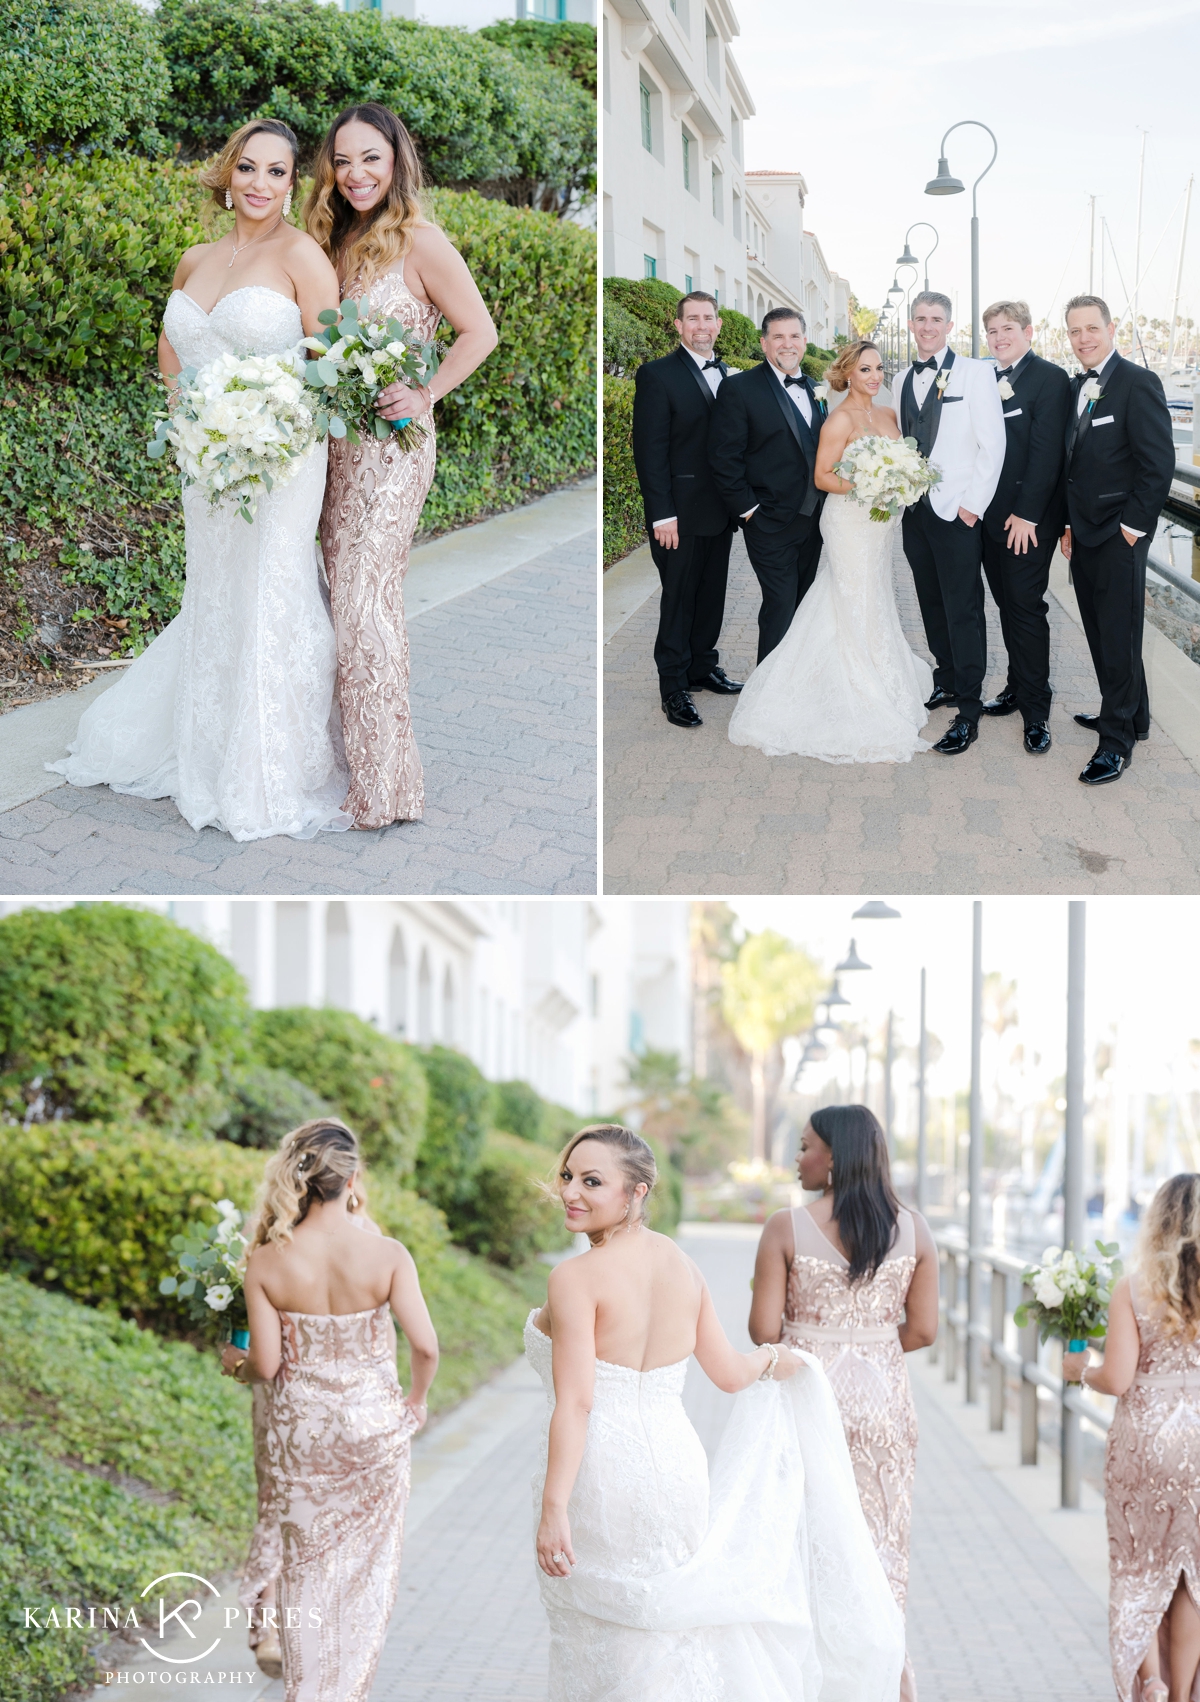 Lisa and Justin – San Pedro Wedding | Karina Pires Photography